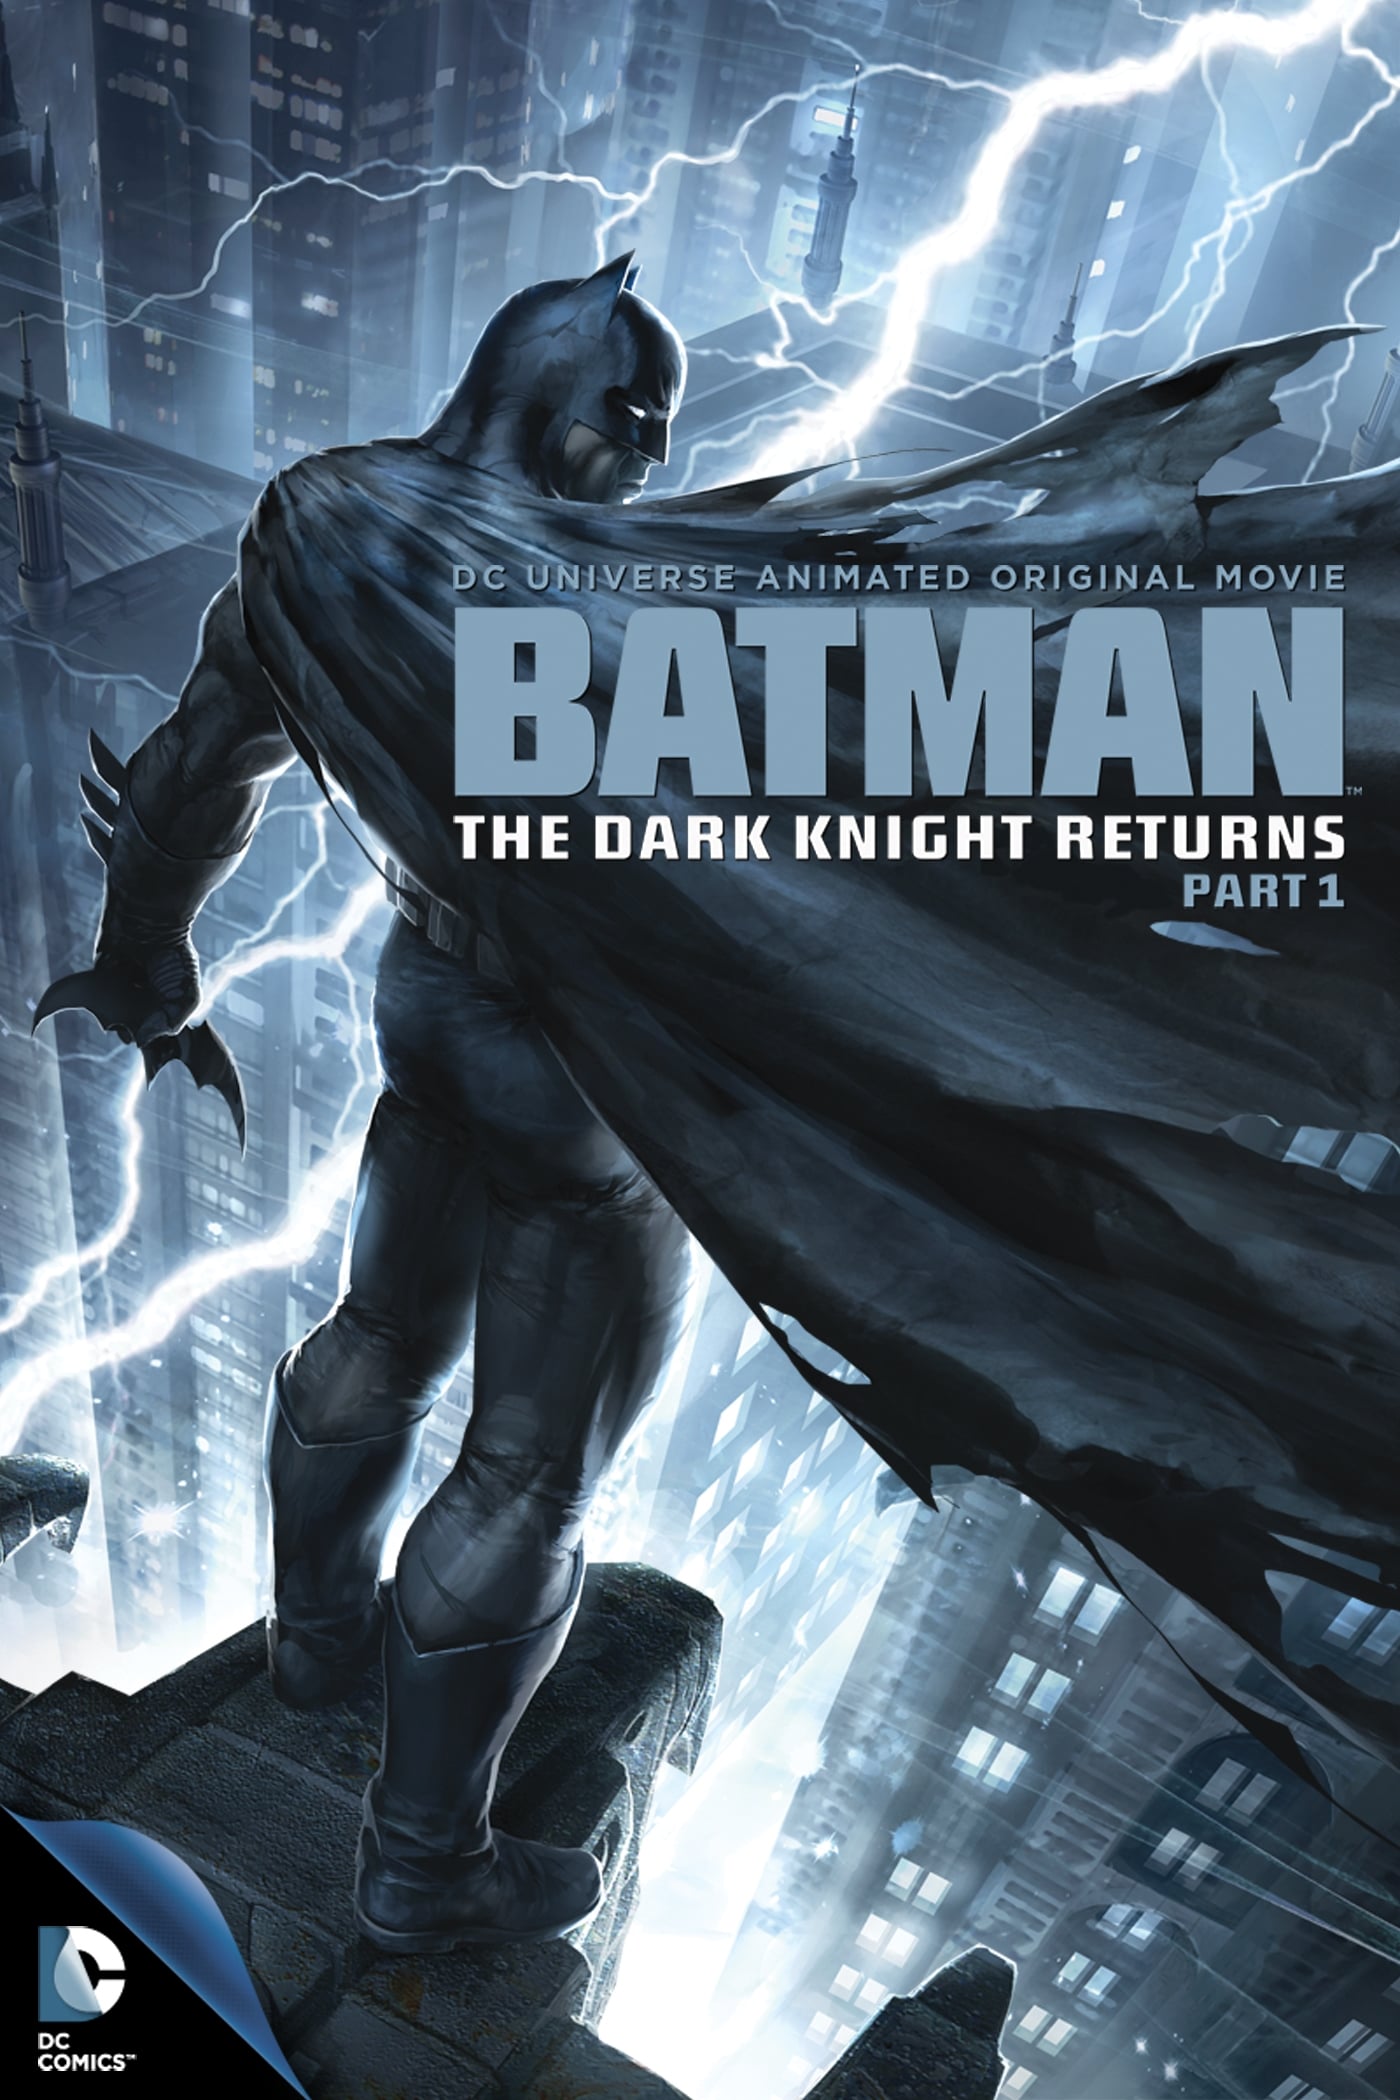 EN - Batman The Dark Knight Returns Part 1 (2012)